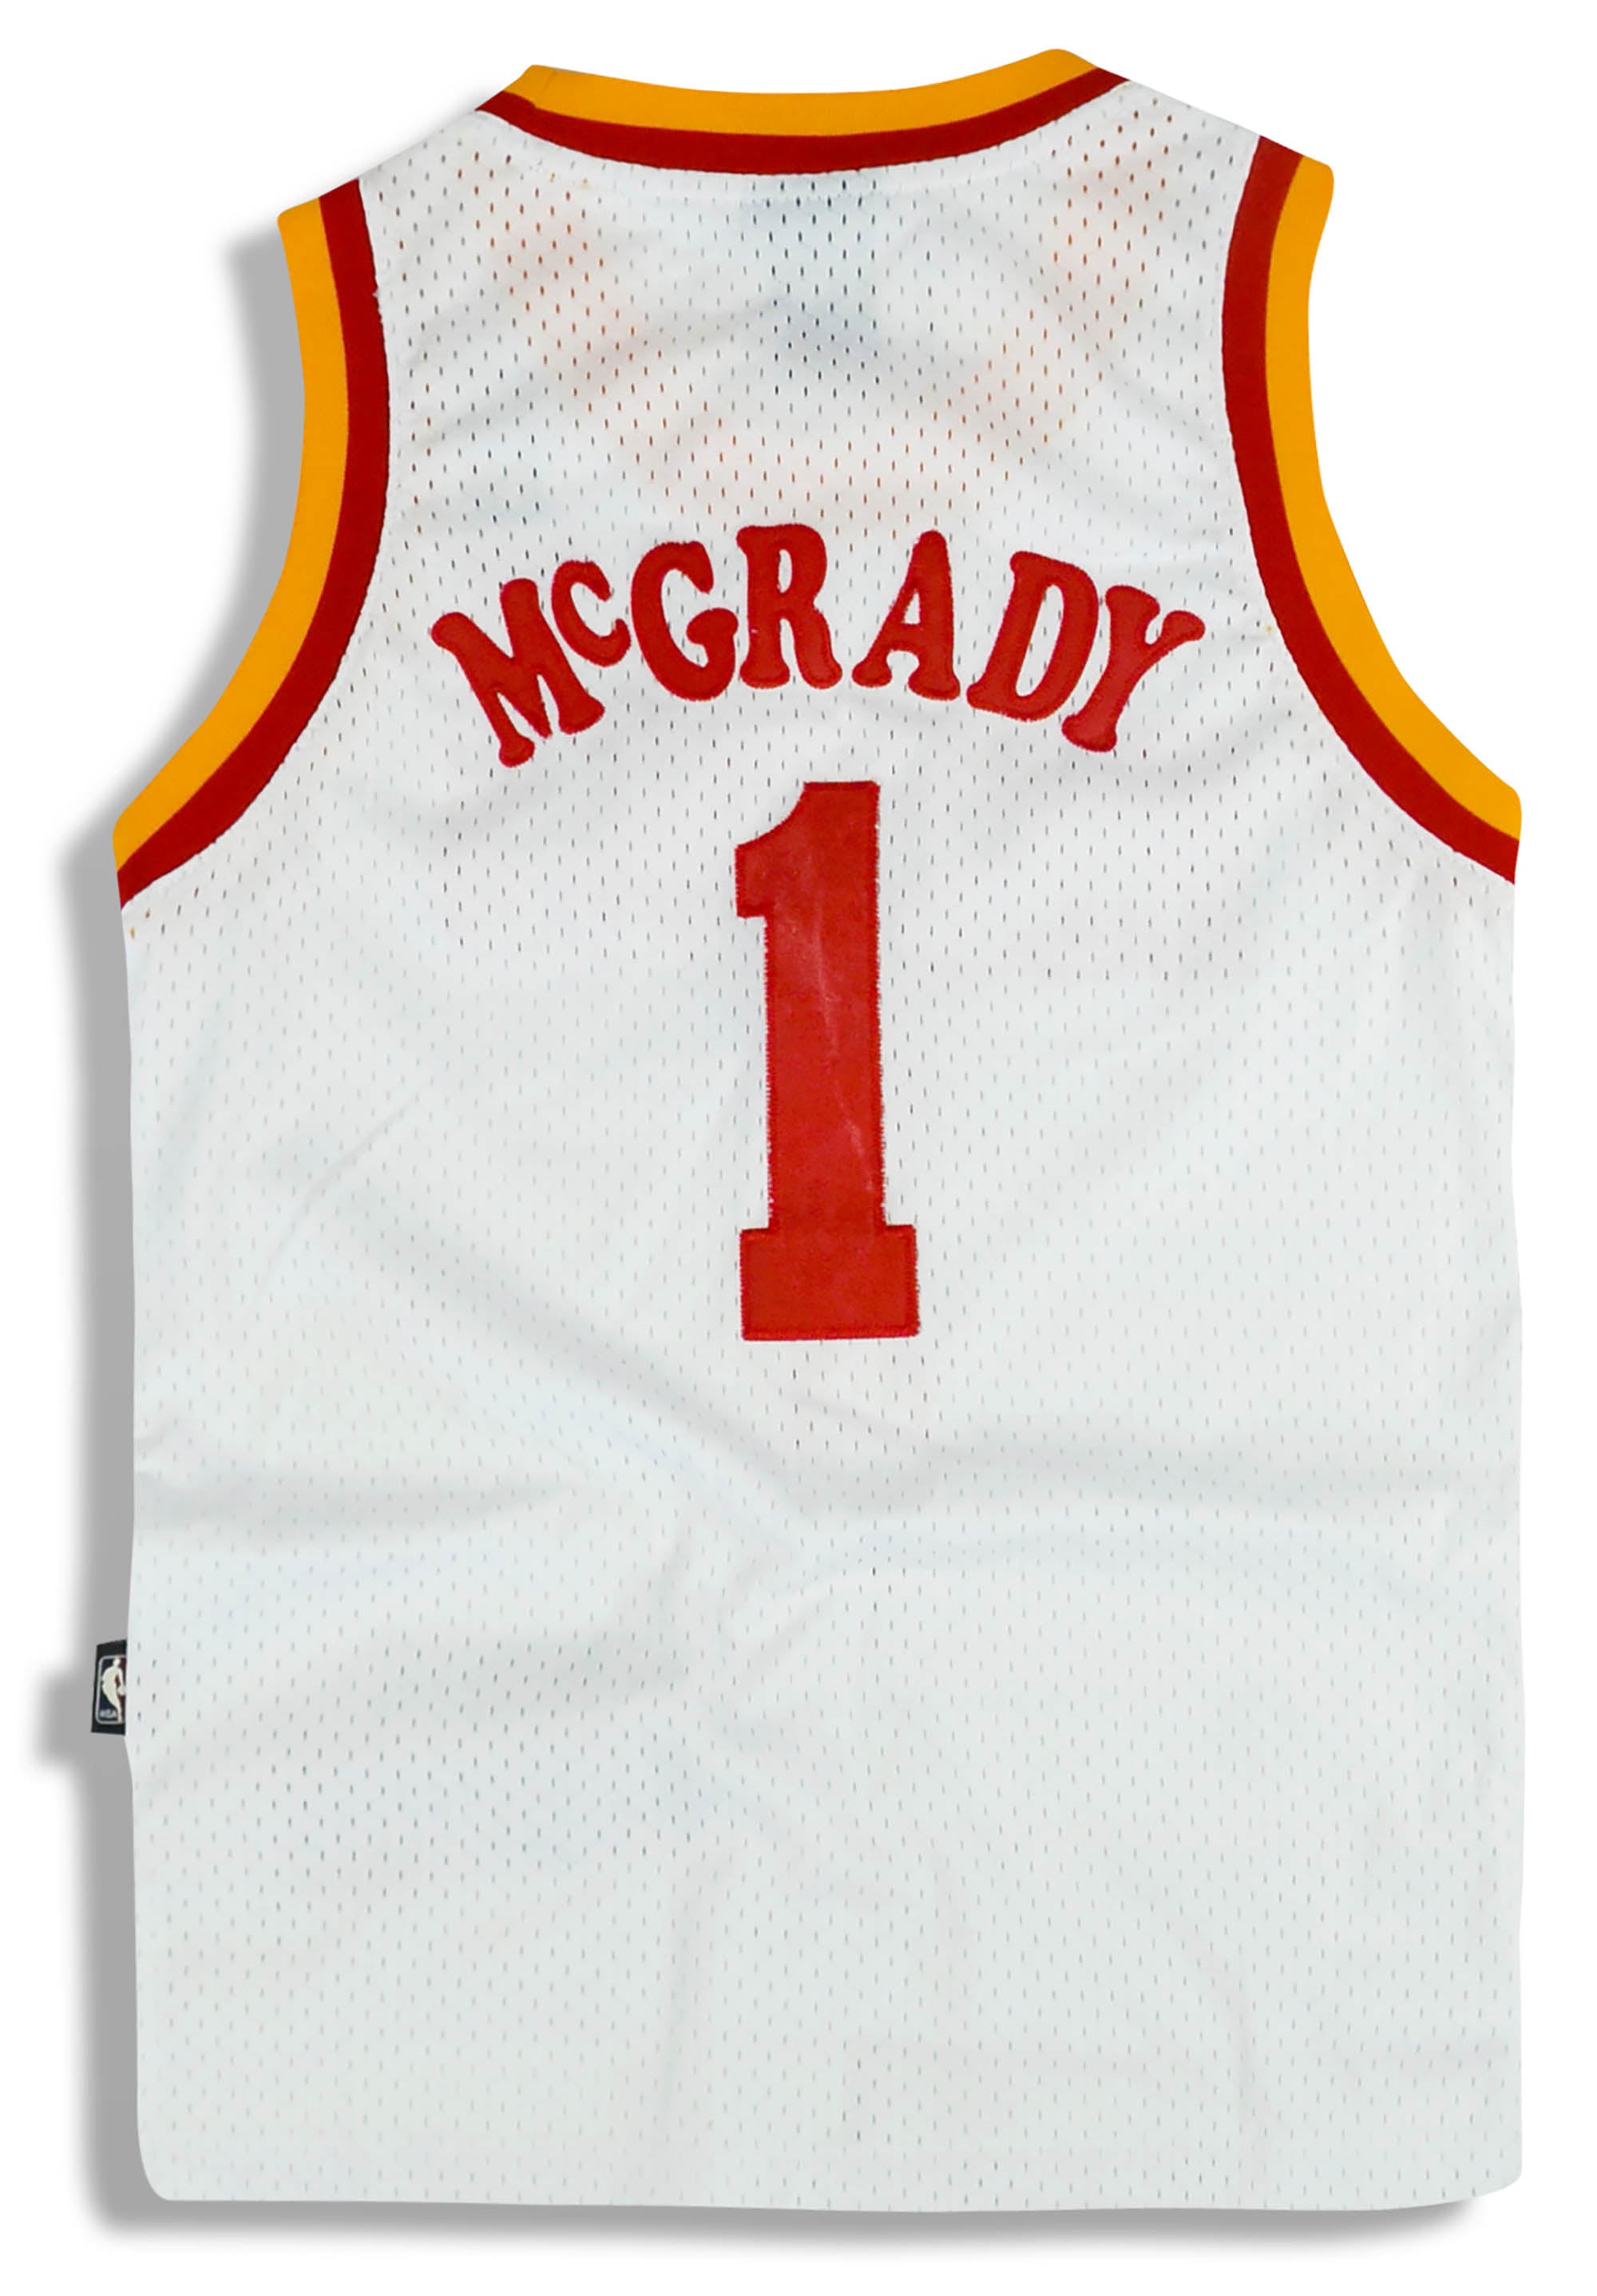 Reebok TRACY McGRADY #1 NBA Houston Rockets Home White Jersey Size XL EUC